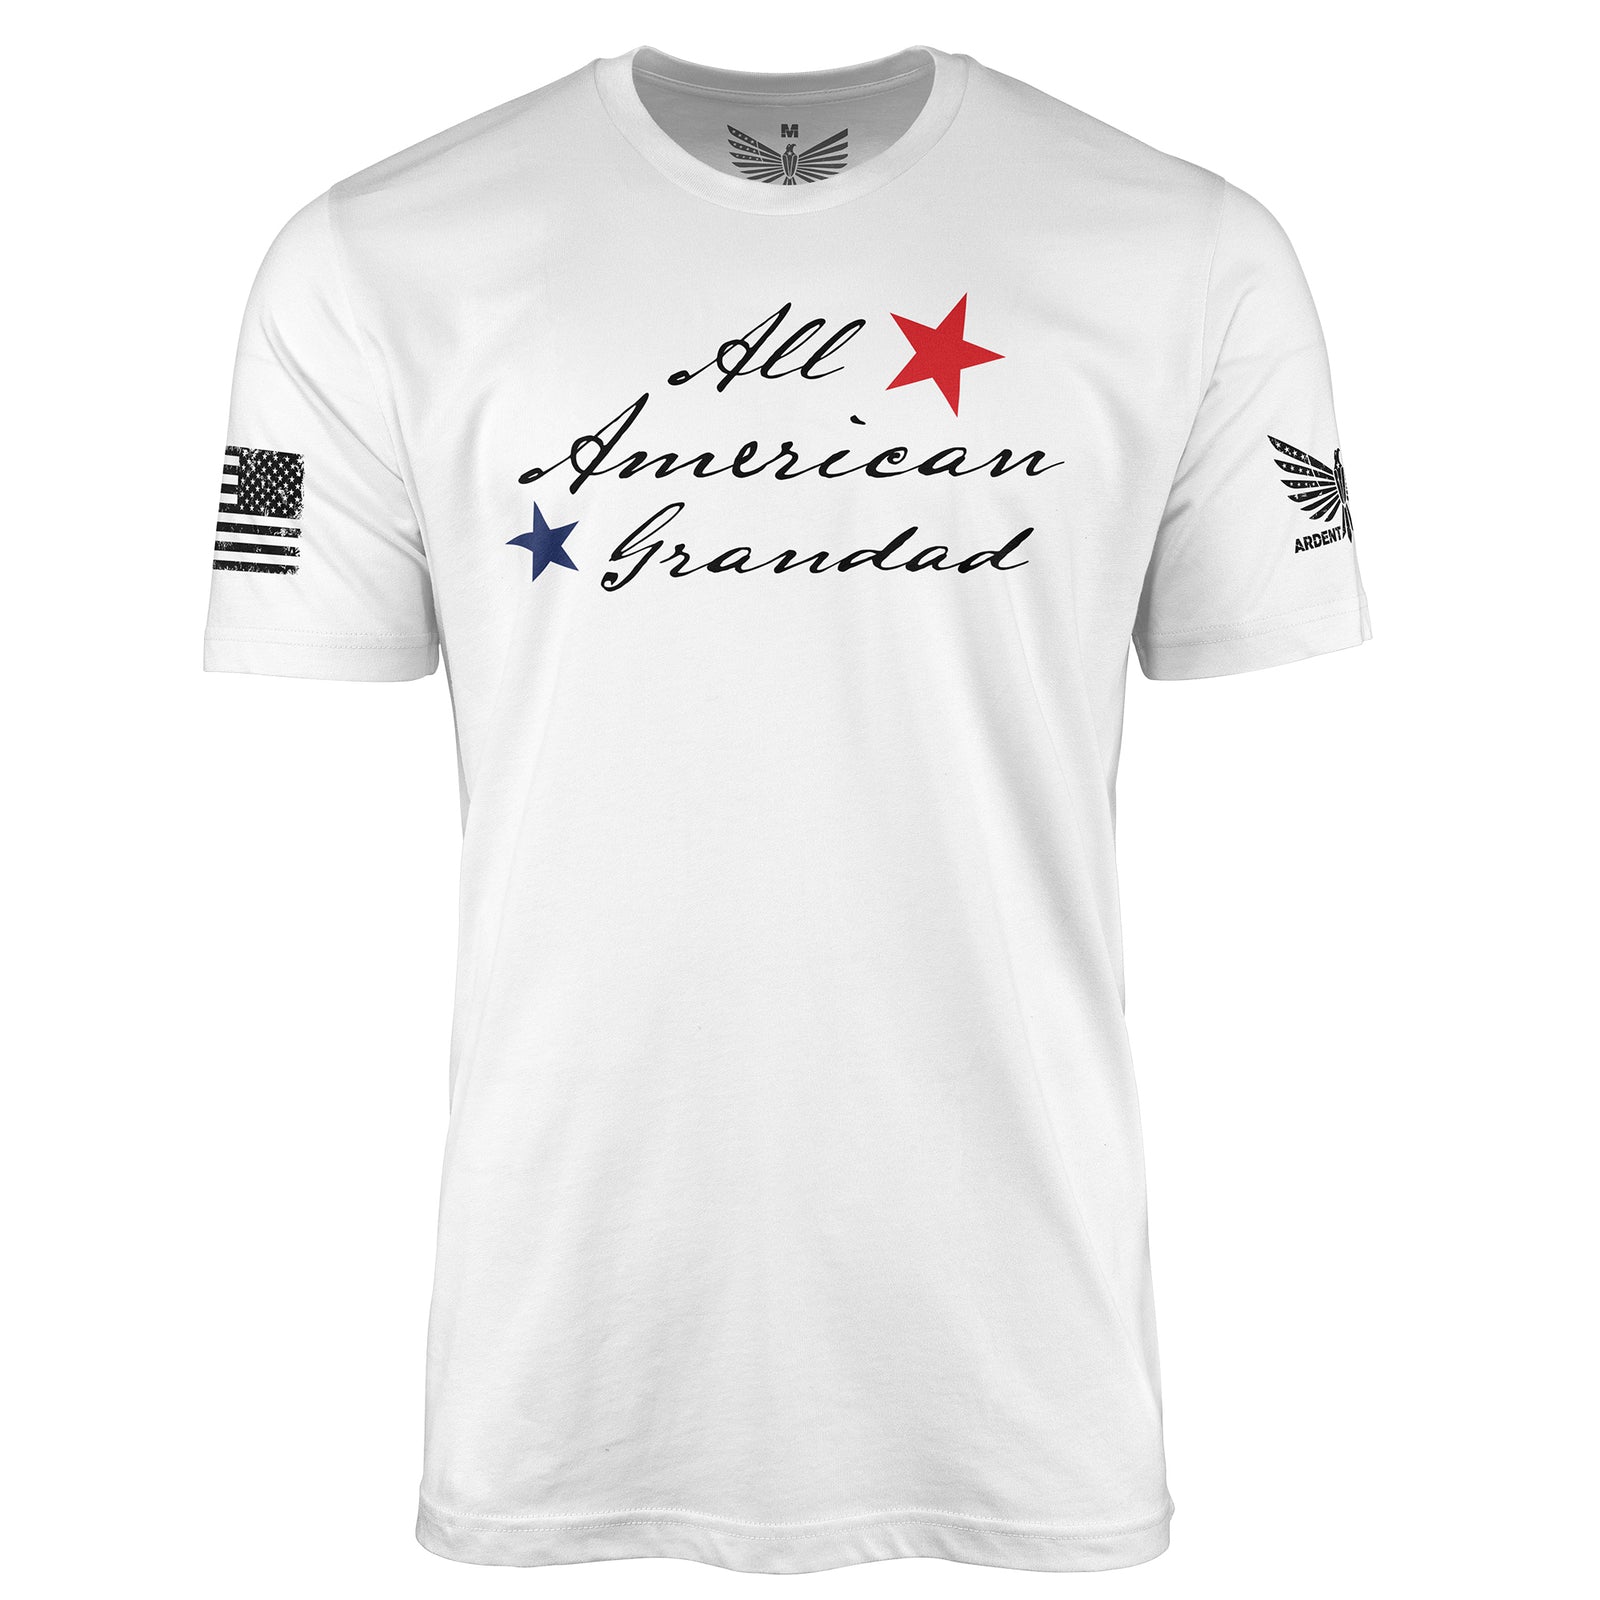 All American Grandad-Men's Shirt-S-Ardent Patriot Apparel Co.